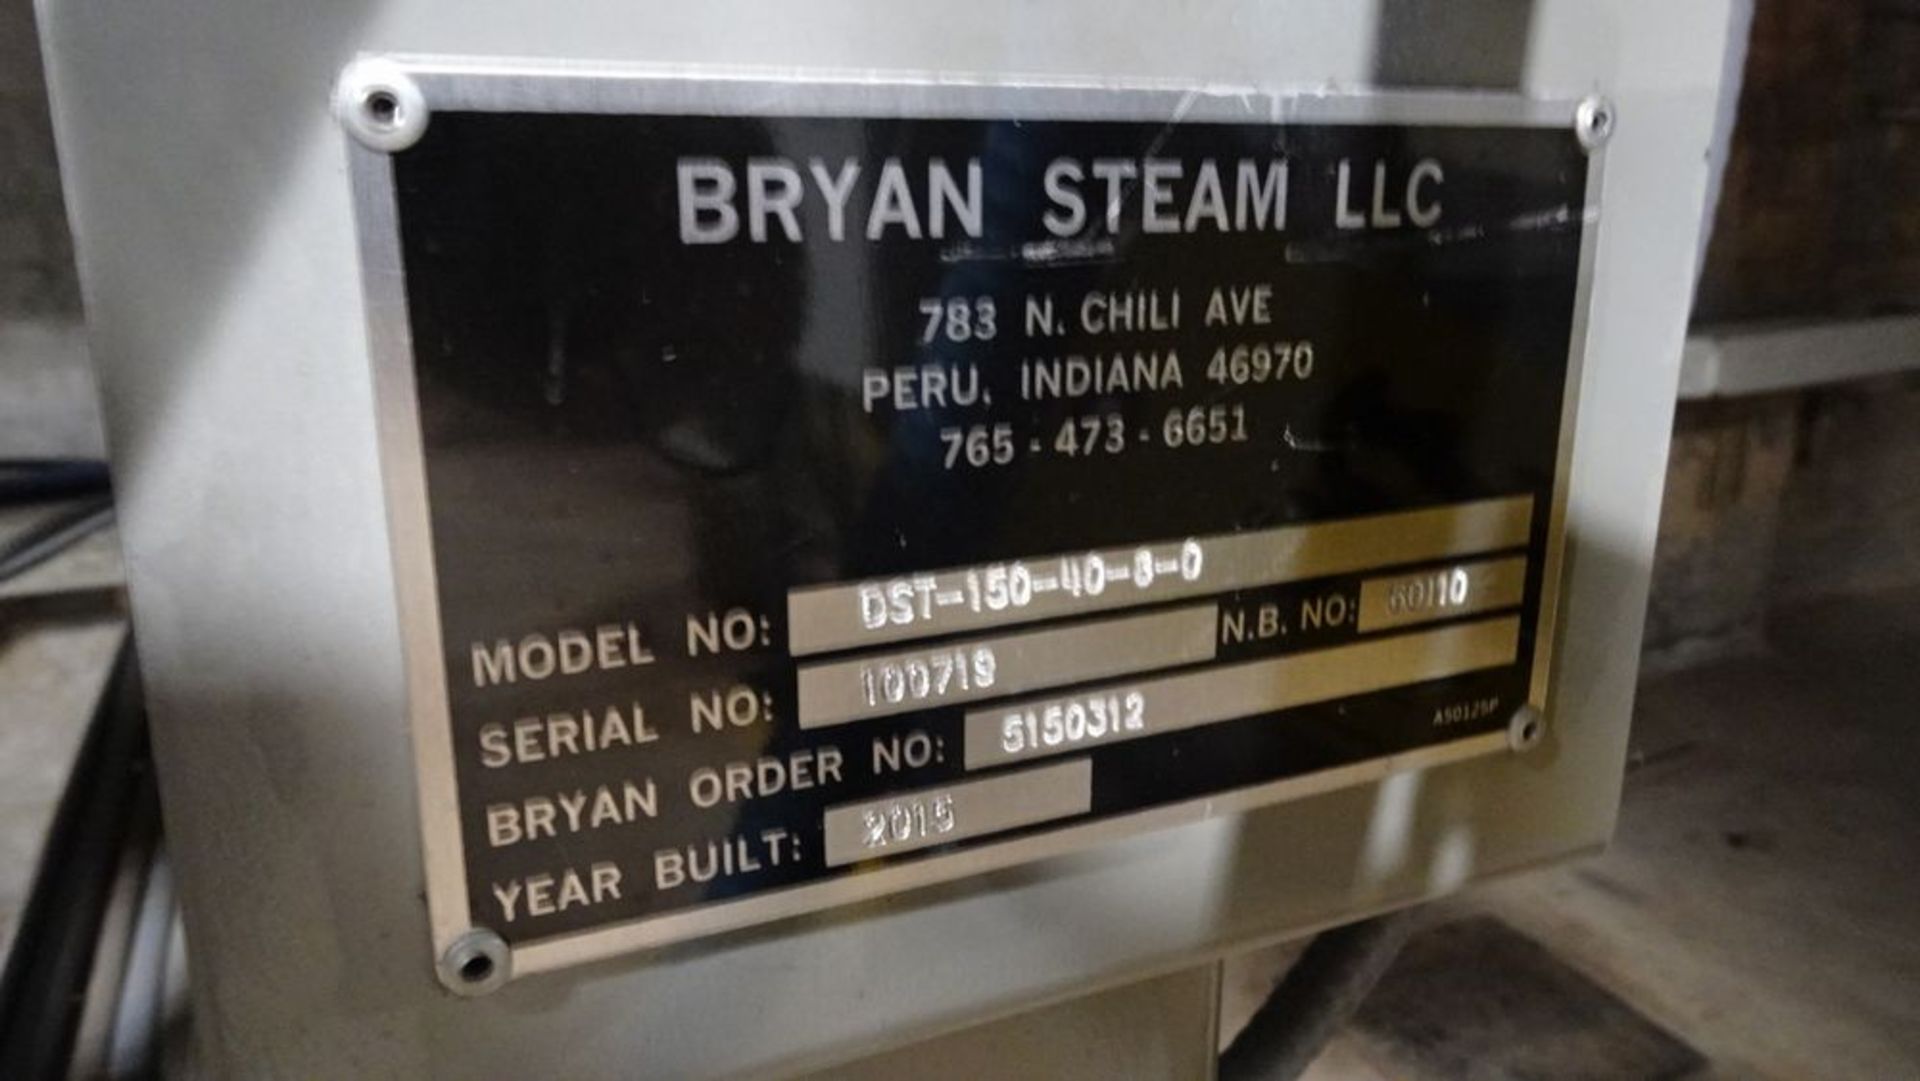 2015 BRYAN STEAM DST-150-40-3-0 DEAERATOR SYSTEM, N.B. *60110, BRYAN ORDER #5150312, S/N 100719 ( - Image 5 of 10